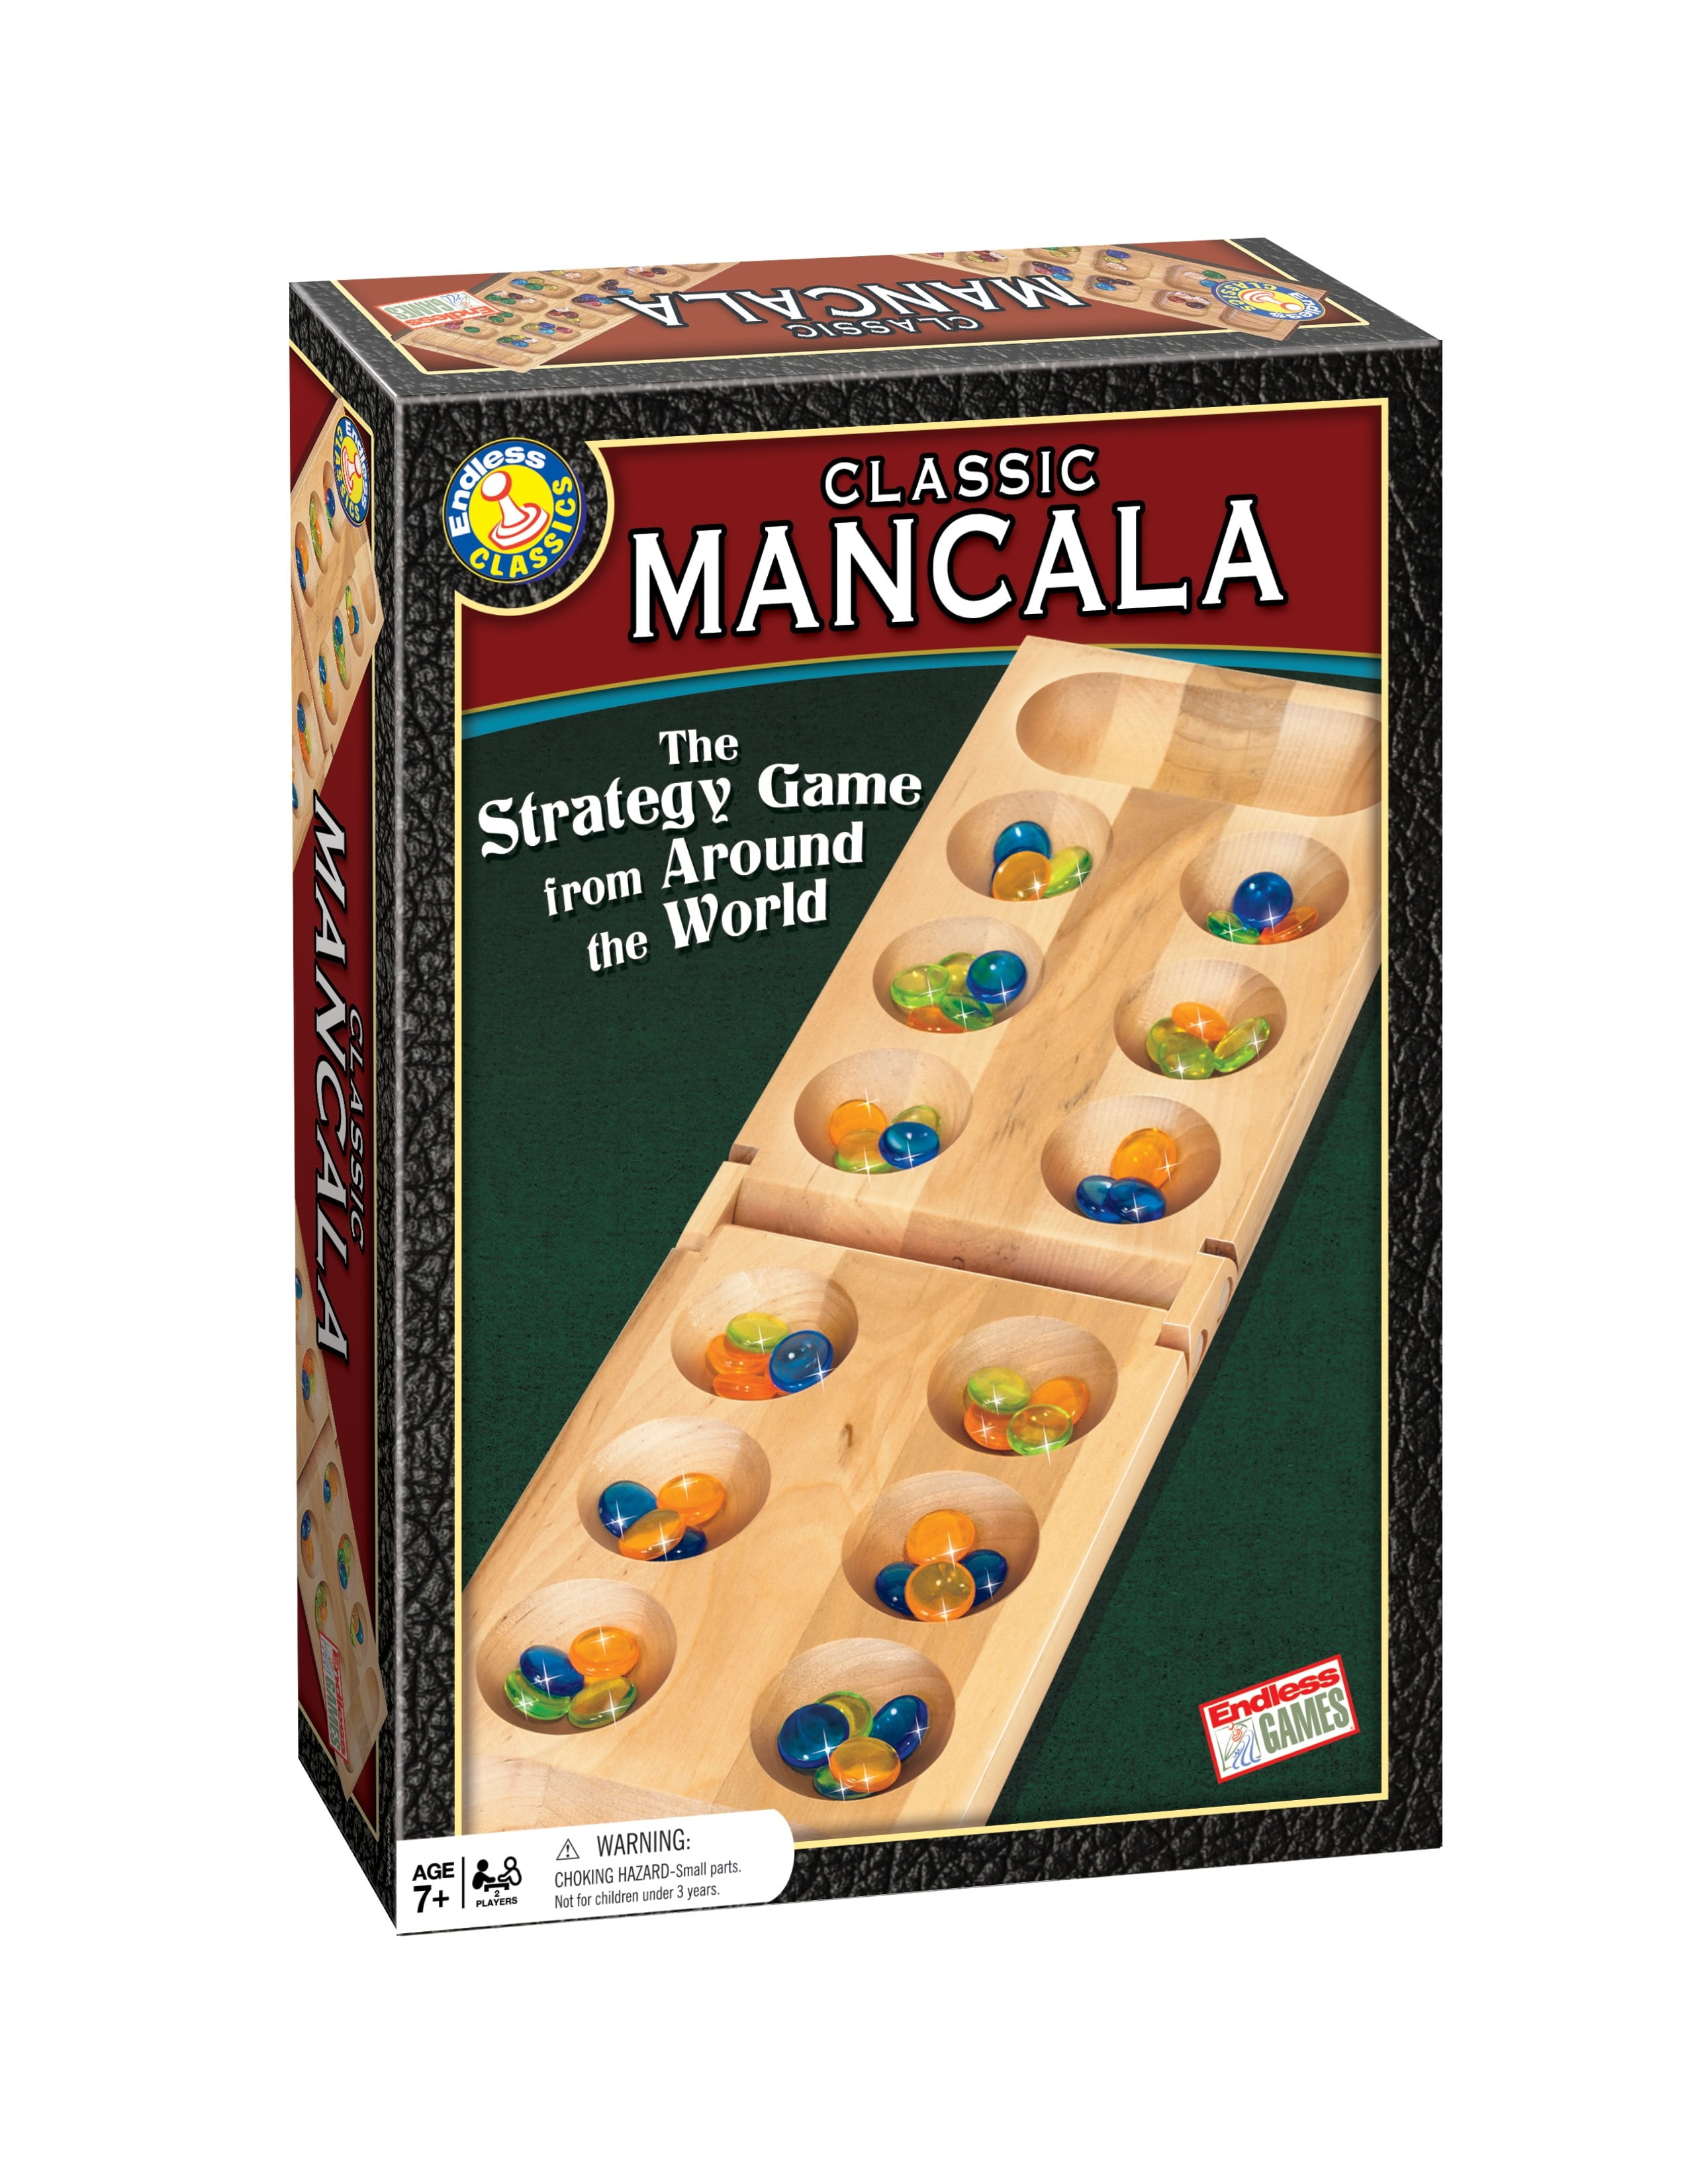 Mancala Folding Set Travel Games by Pressman 4426 06 for sale online 